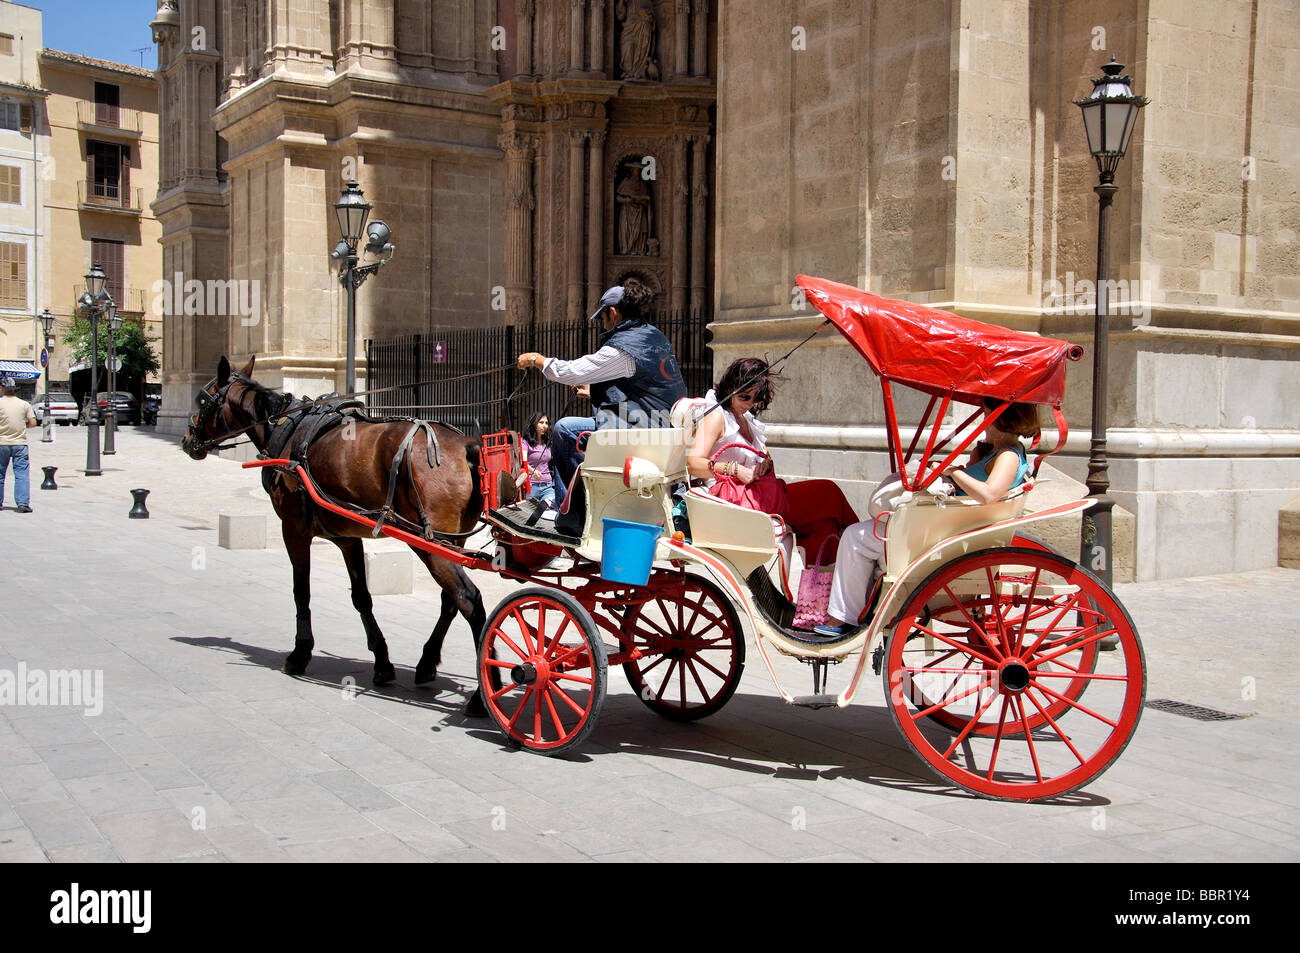 Horse carriage by Palma Cathedral, Palma de Mallorca, Palma Municipality, Mallorca, Balearic Islands, Spain Stock Photo